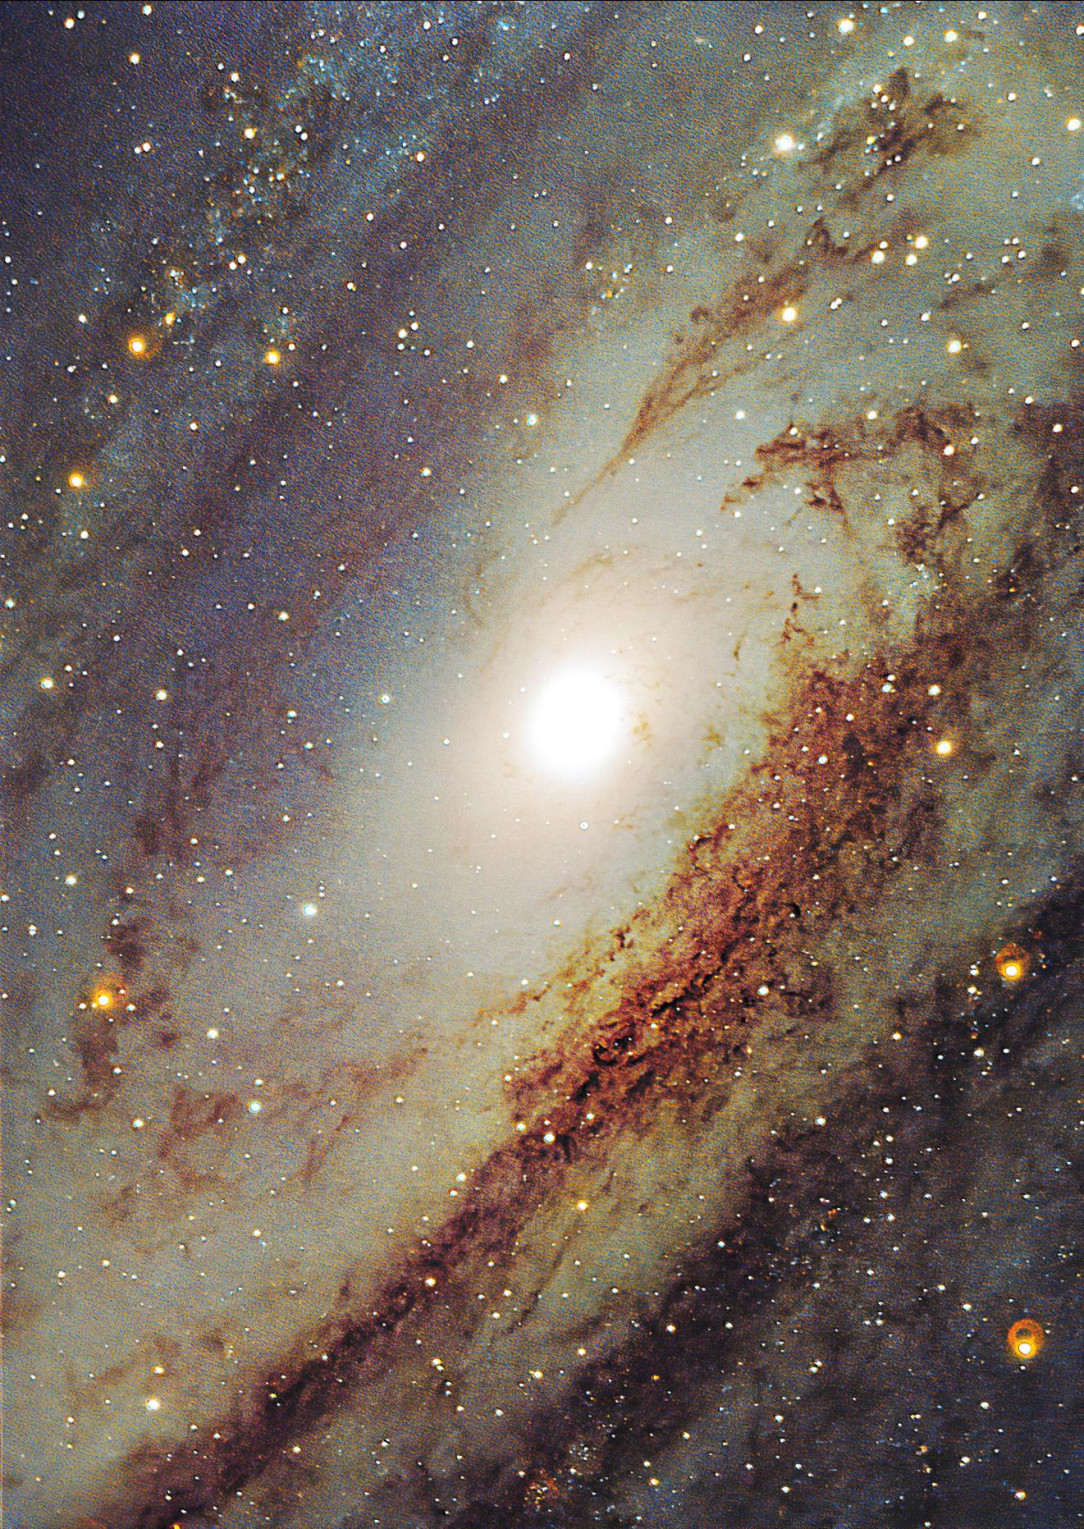 Andromeda Galaxy - the core